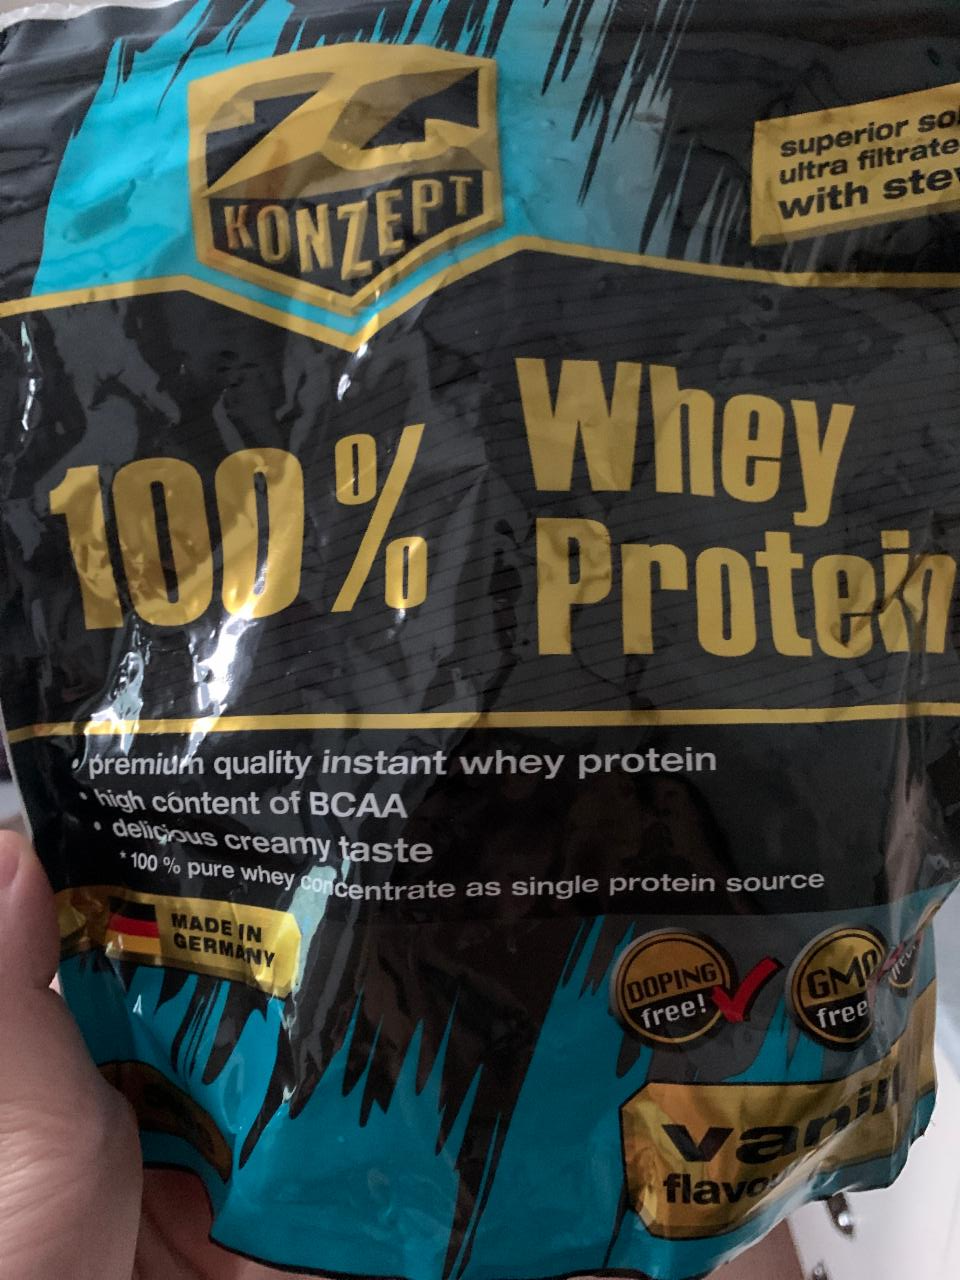 Fotografie - valikovy protein konzept